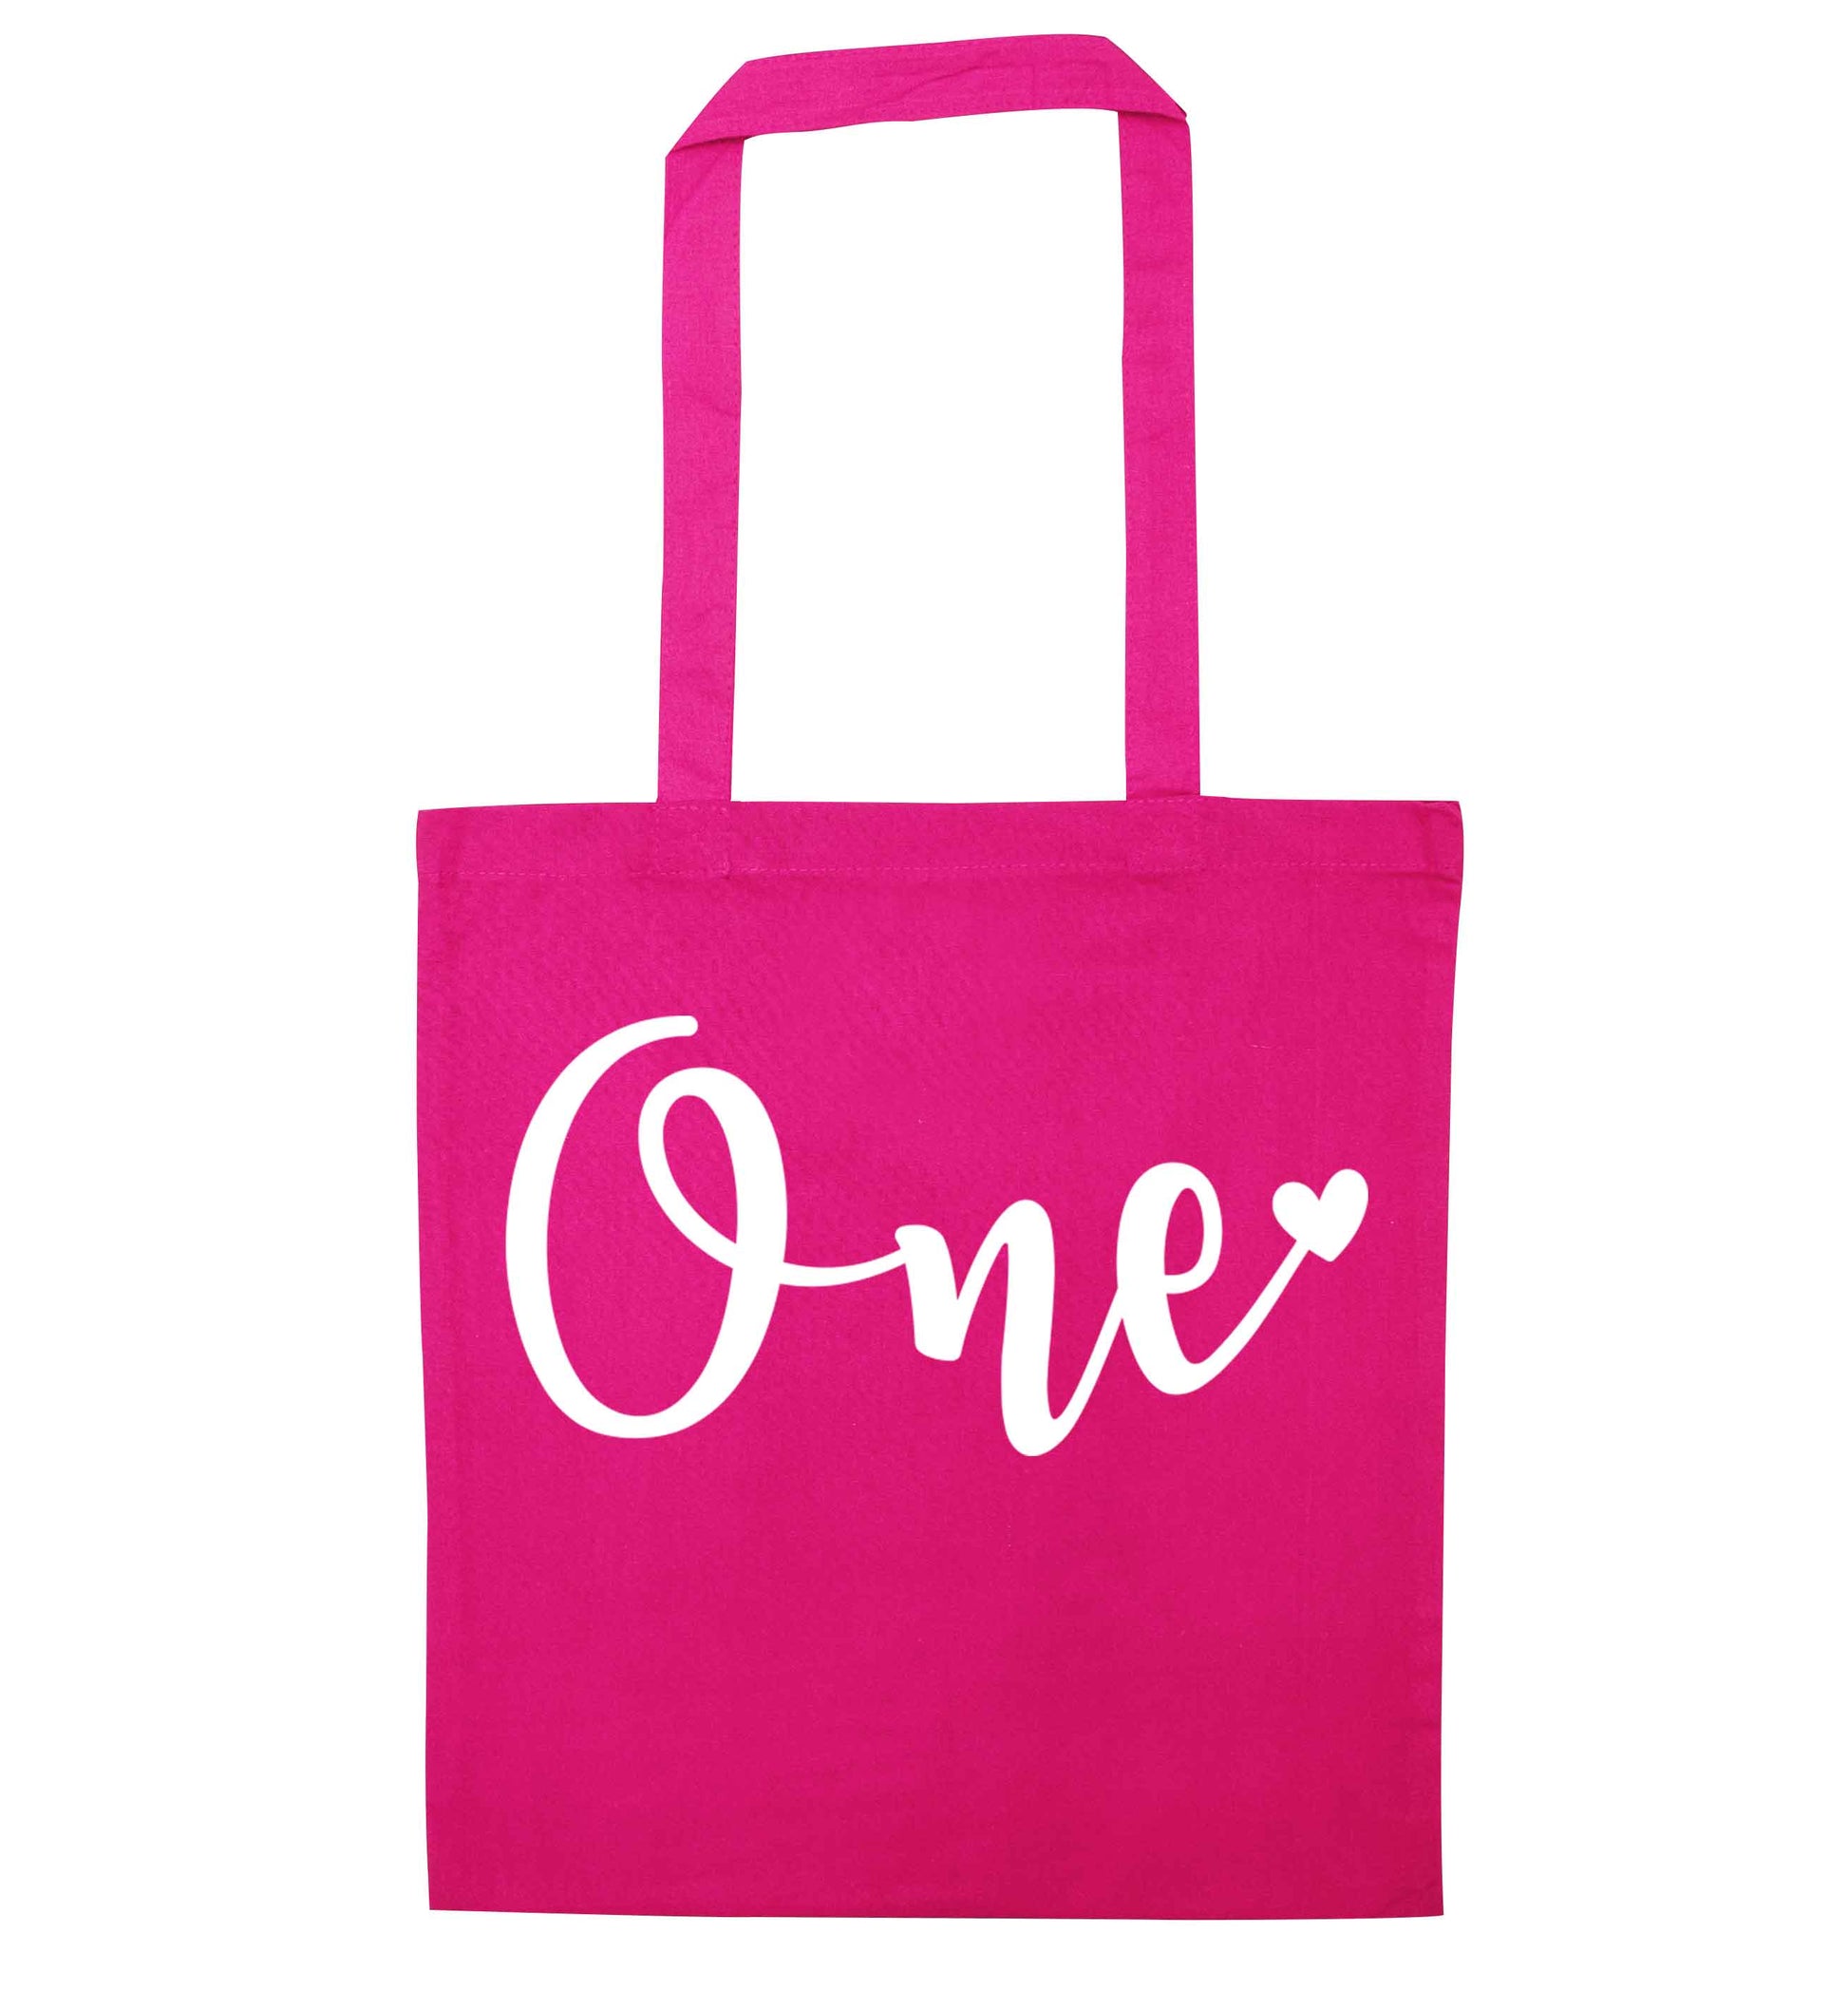 One pink tote bag